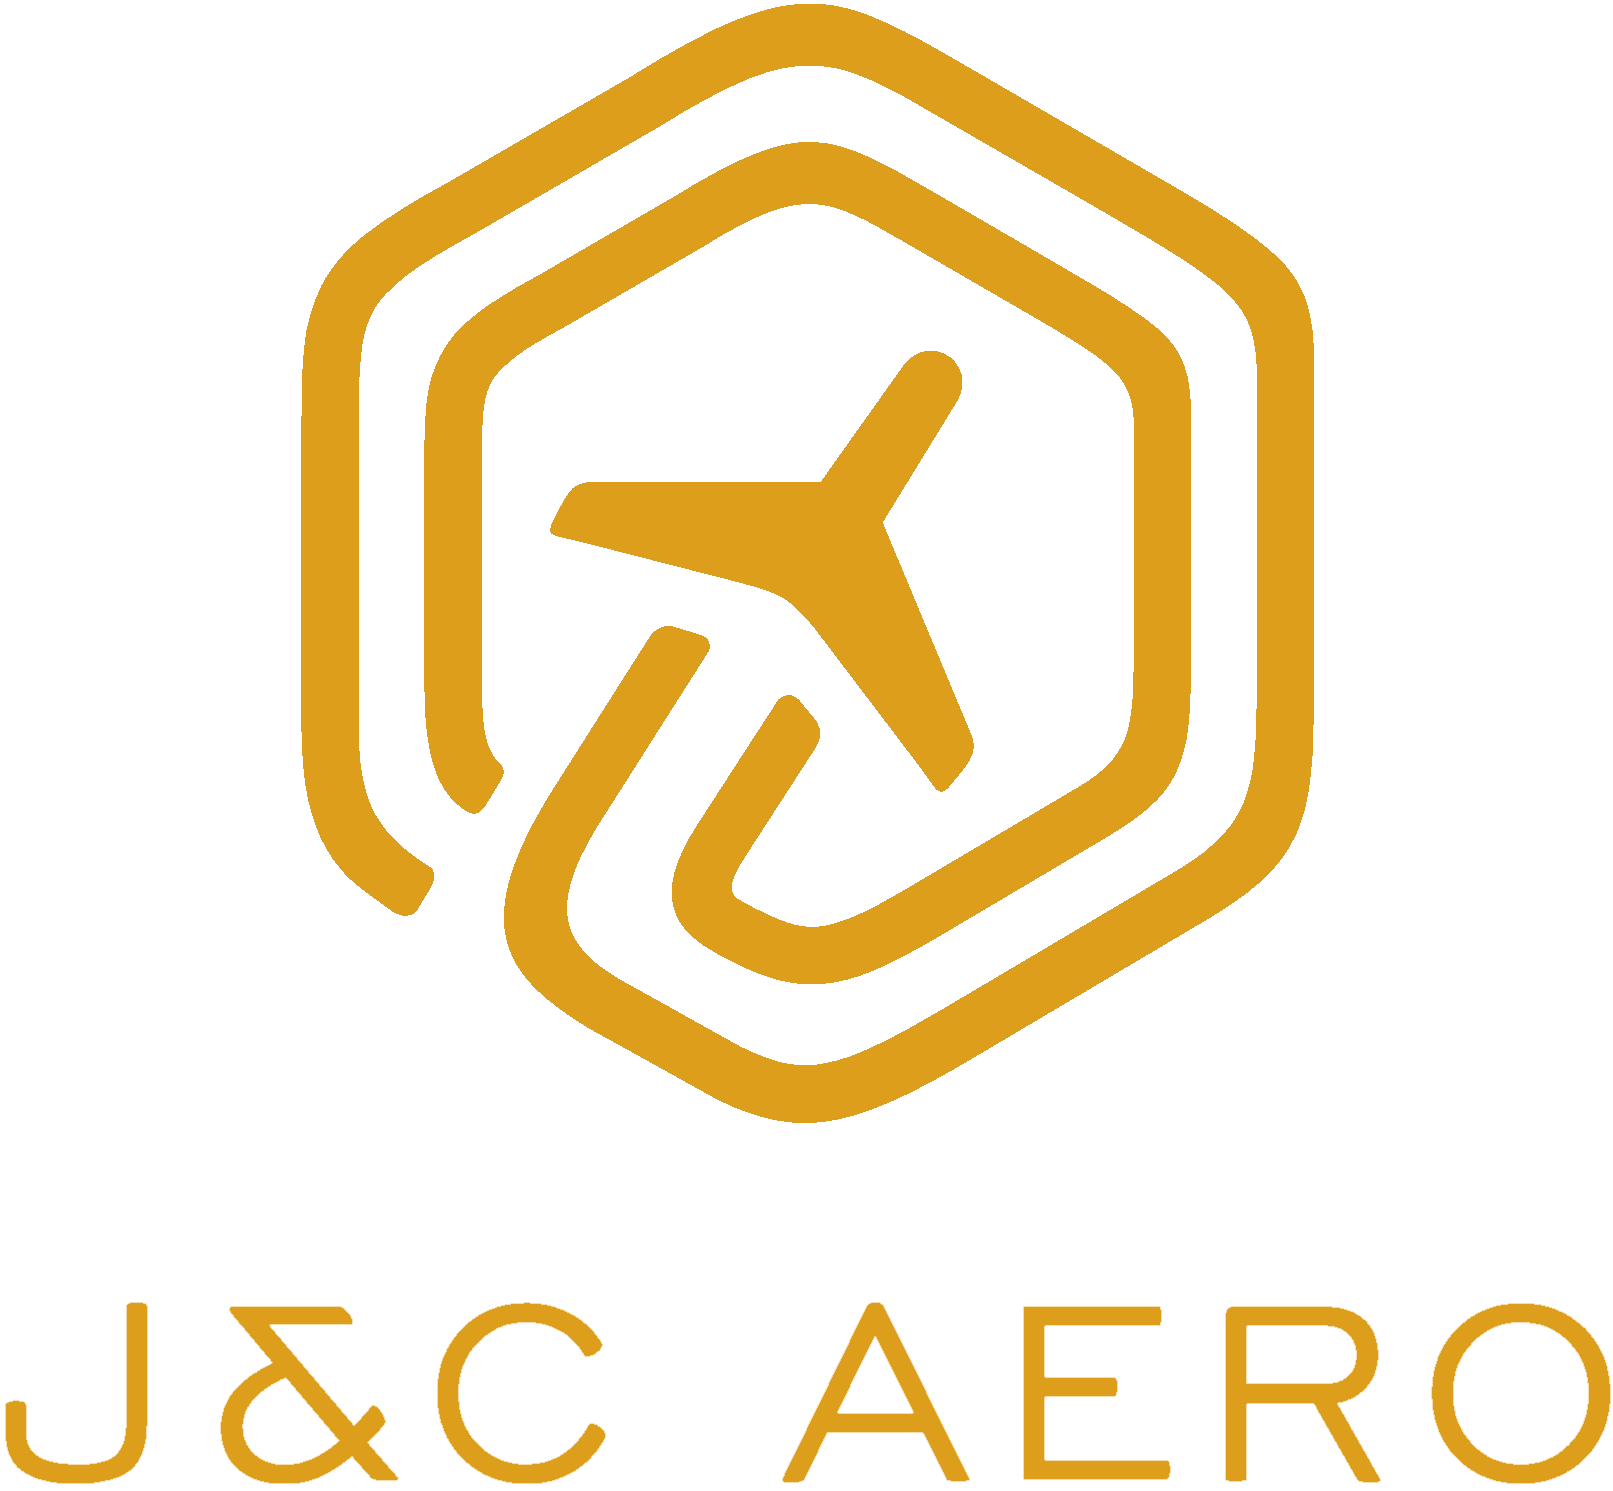 J&C Aero